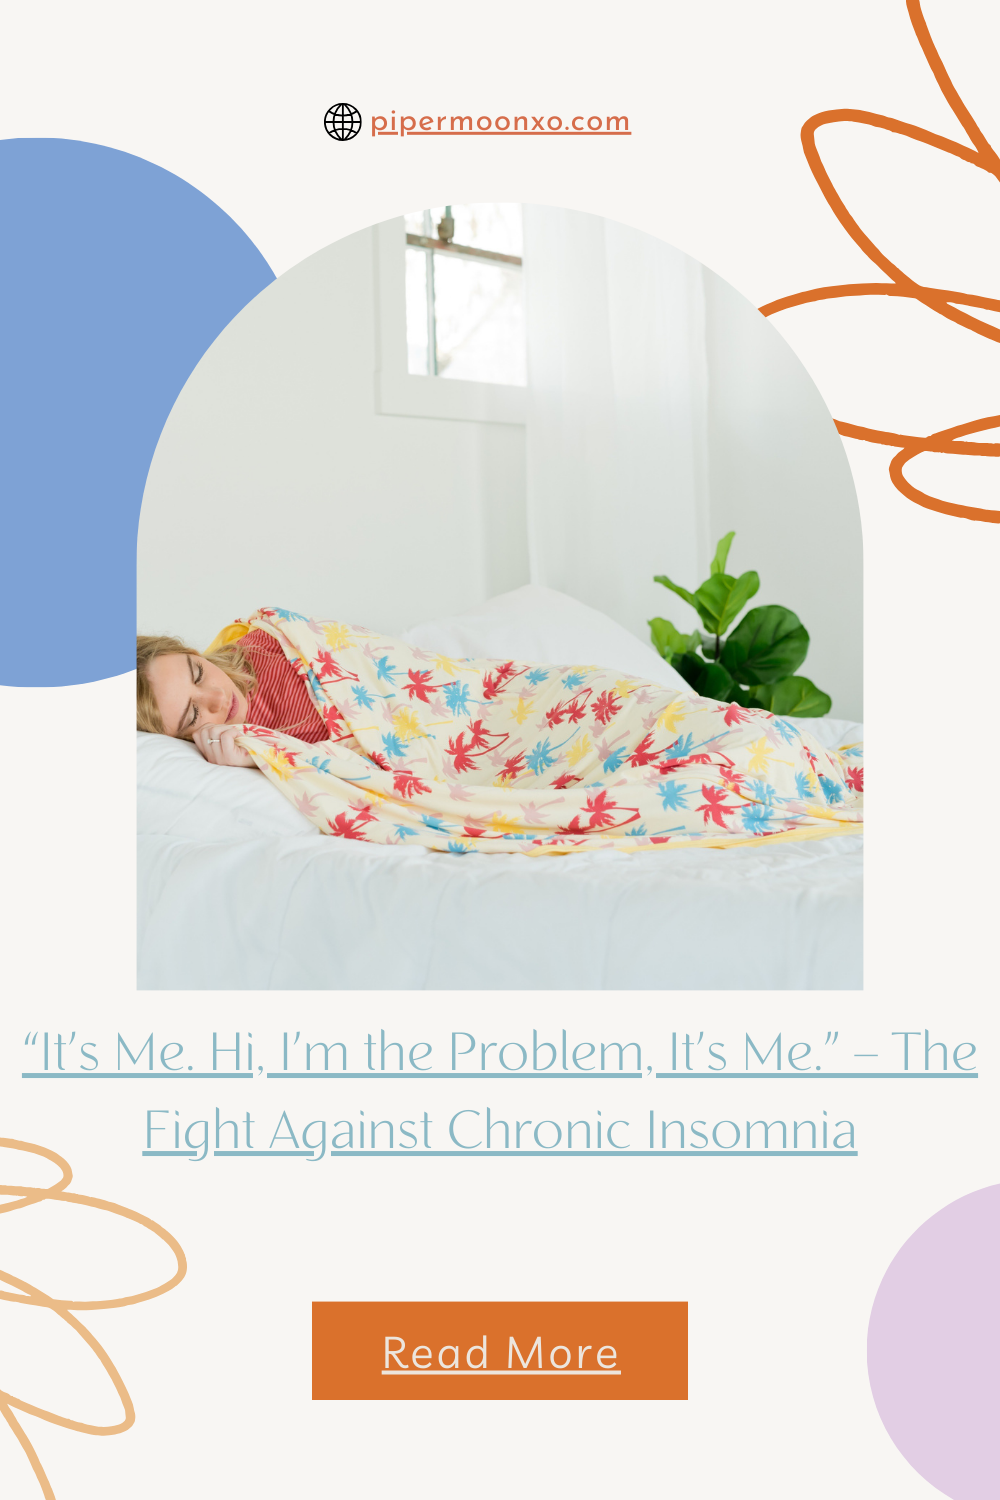 “It’s Me.  Hi, I’m the Problem, It’s Me.” – The Fight Against Chronic Insomnia